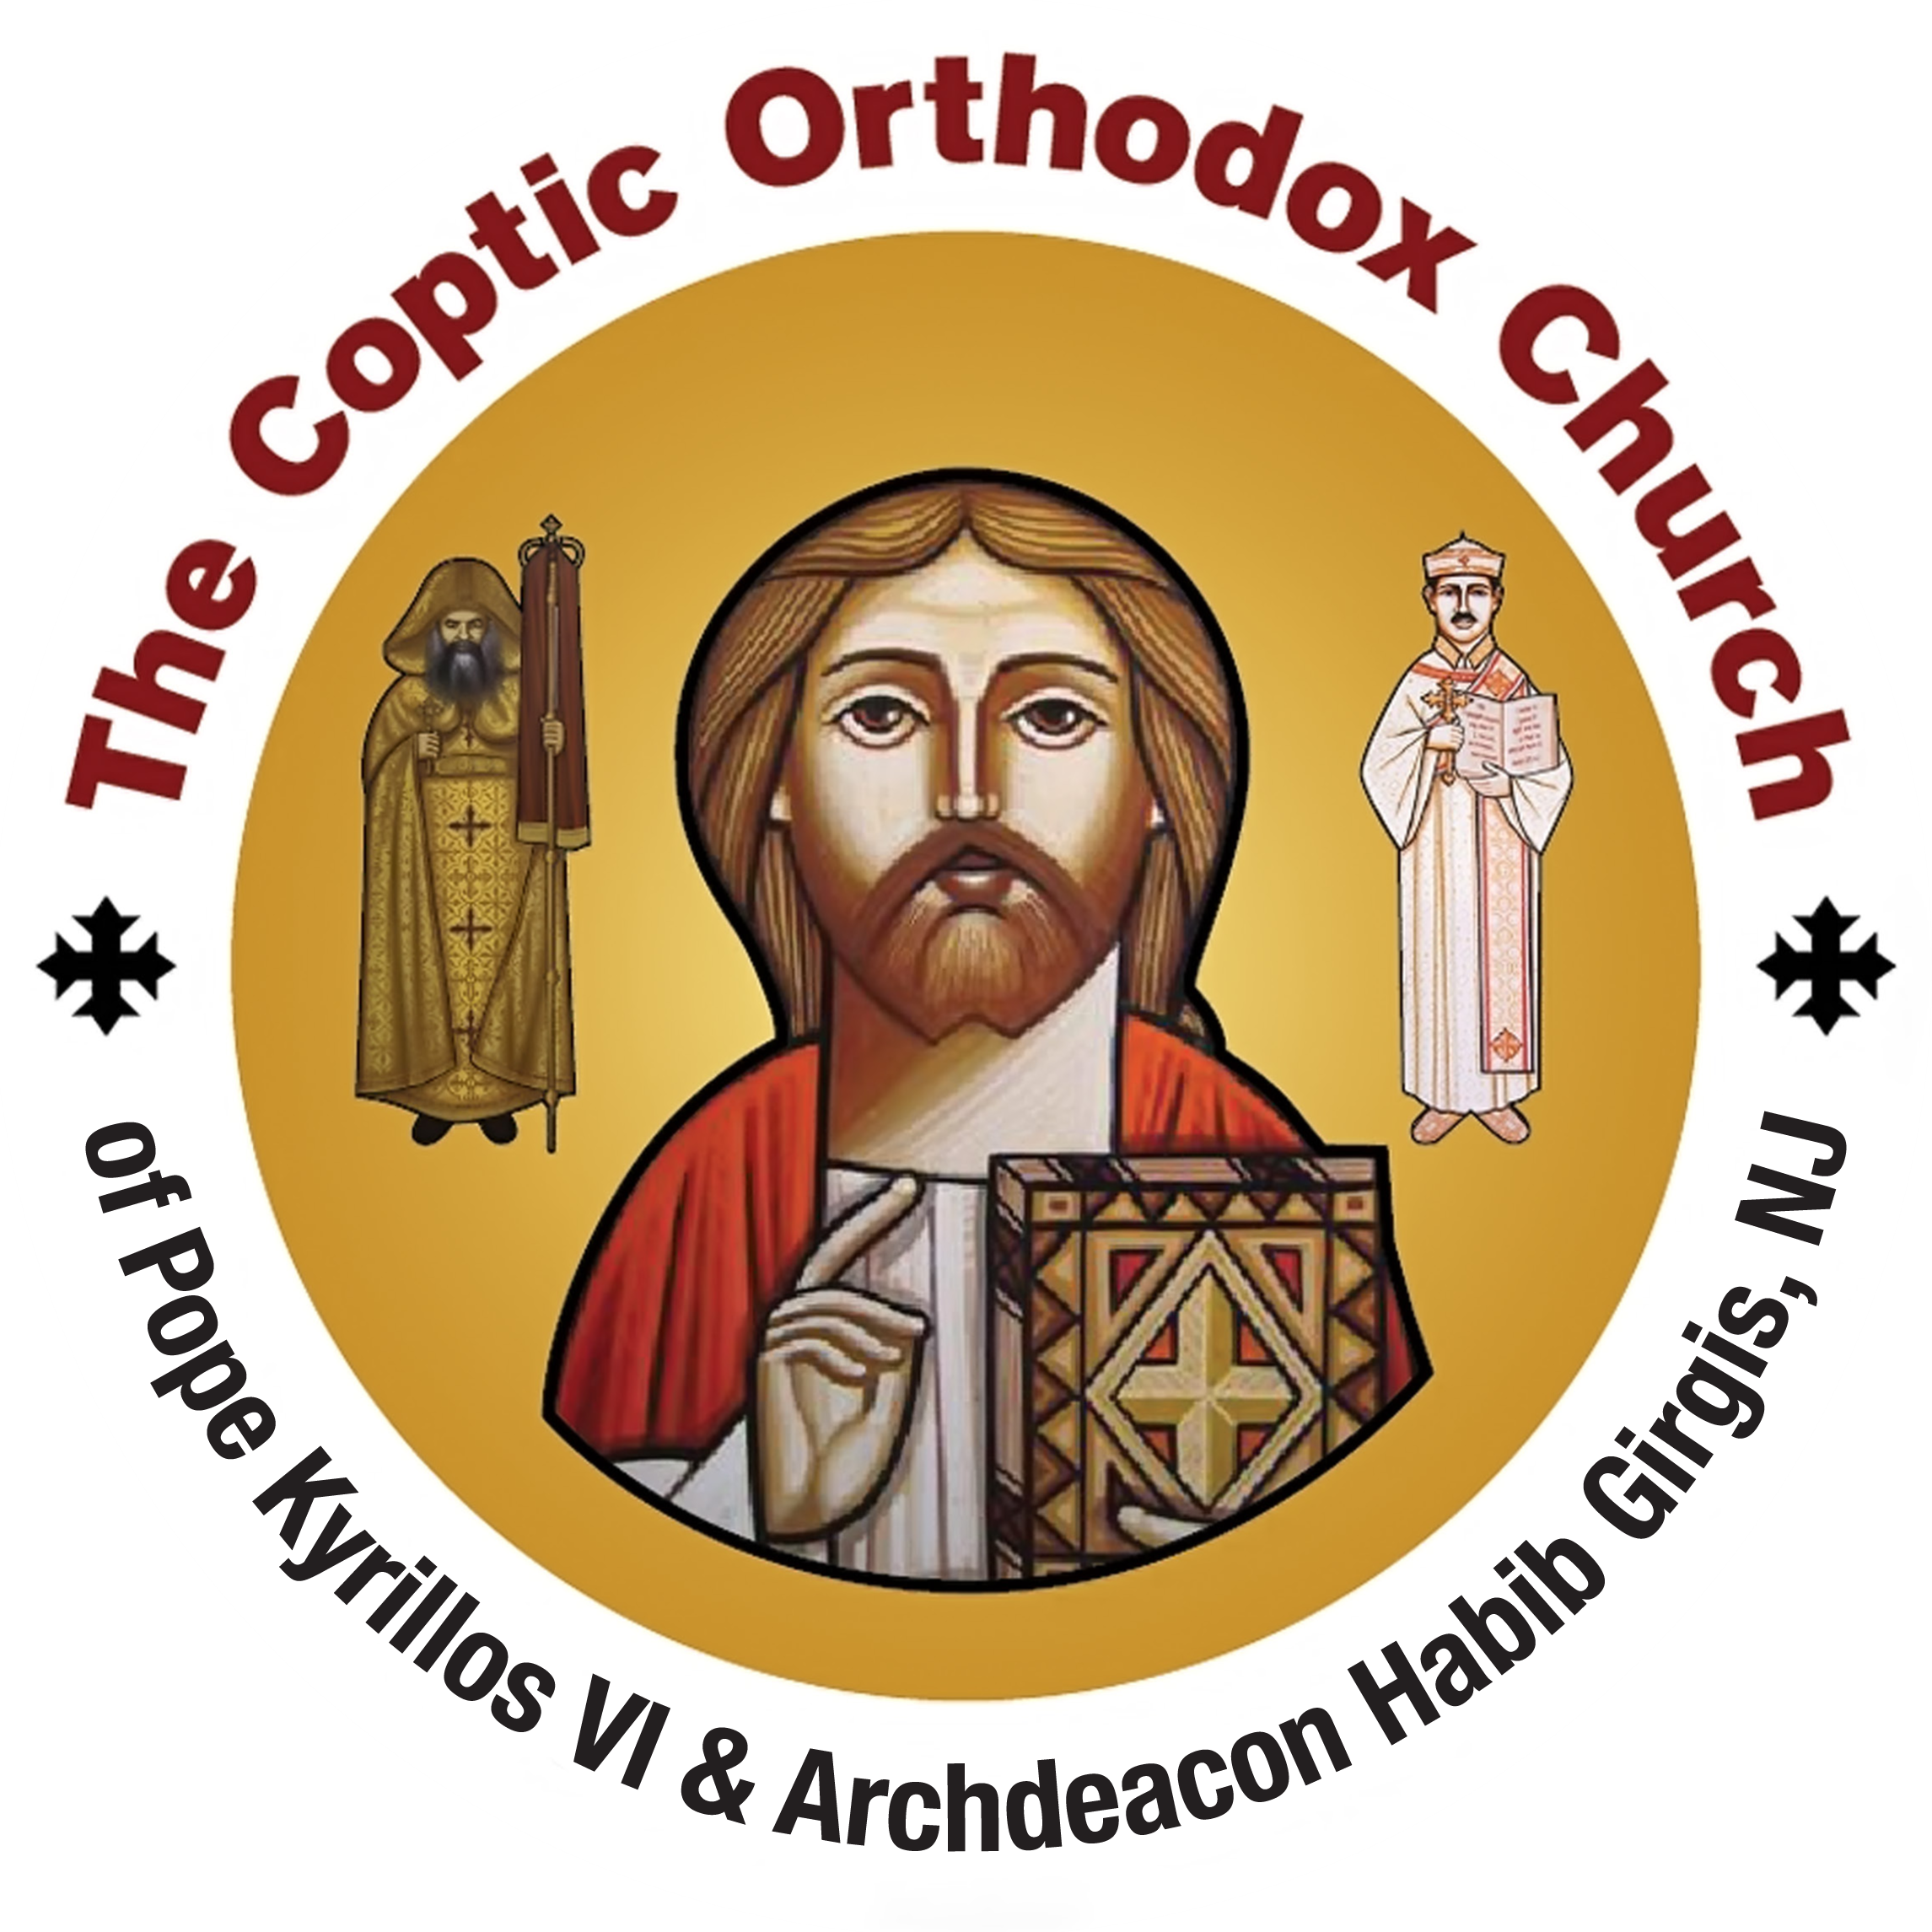 The Coptic Orthodox Church